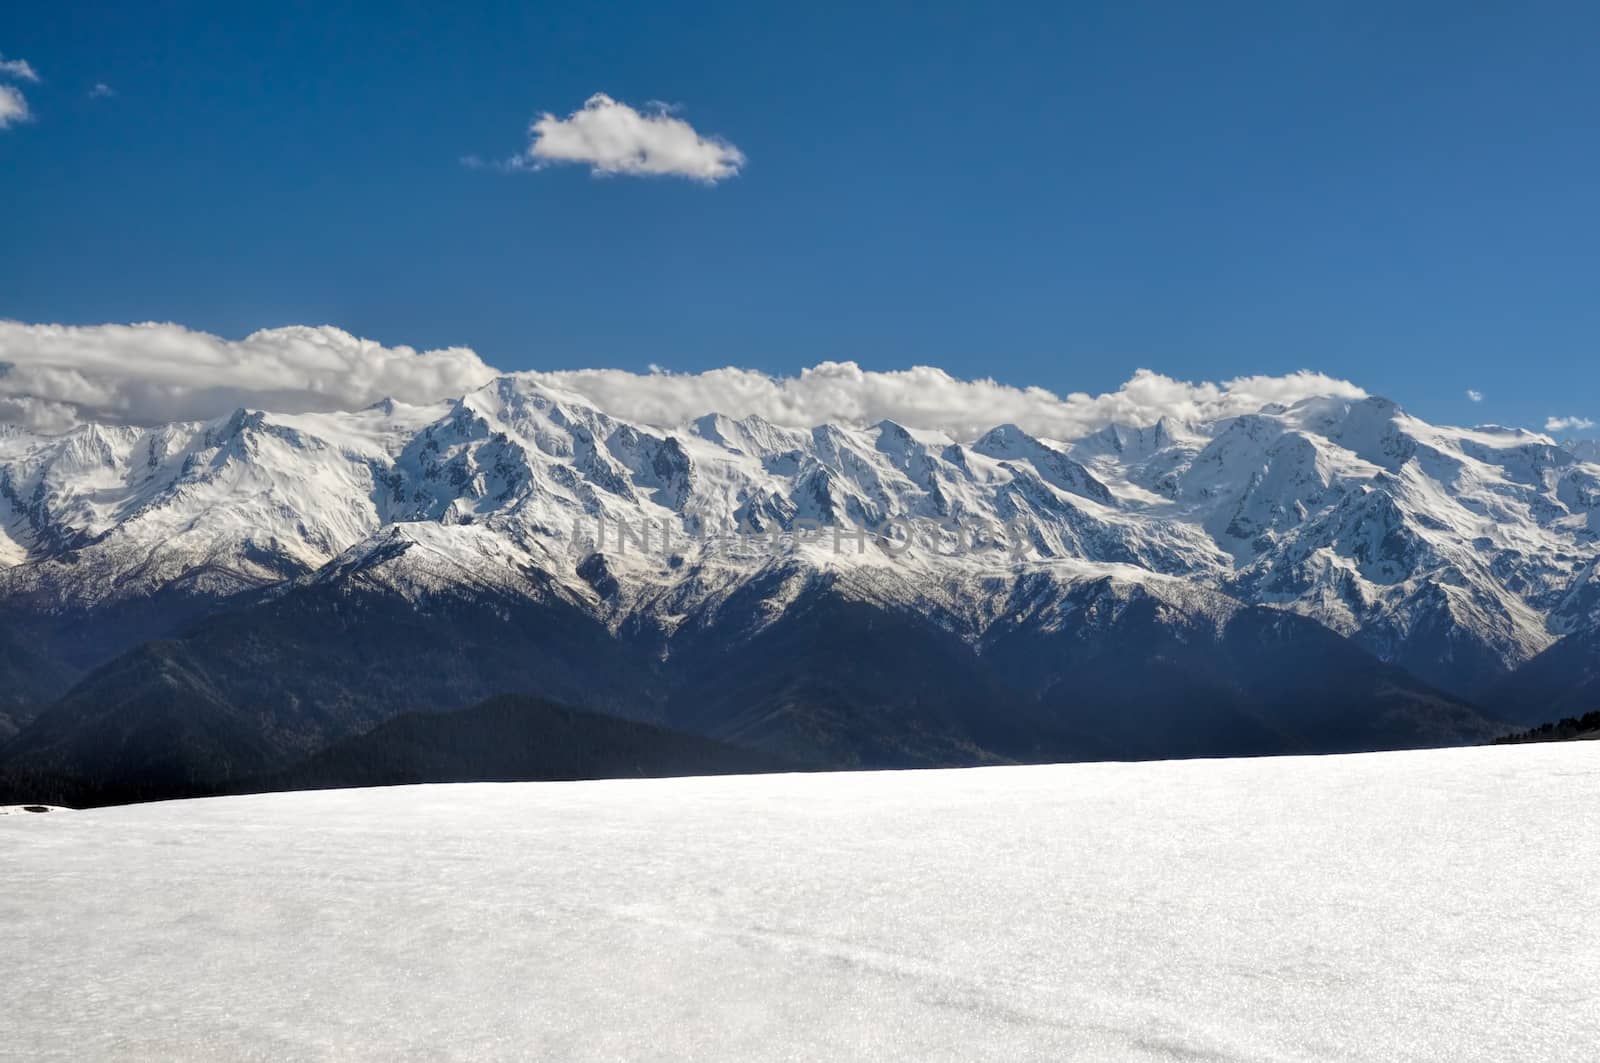 Caucasus Mountains, Svaneti by MichalKnitl